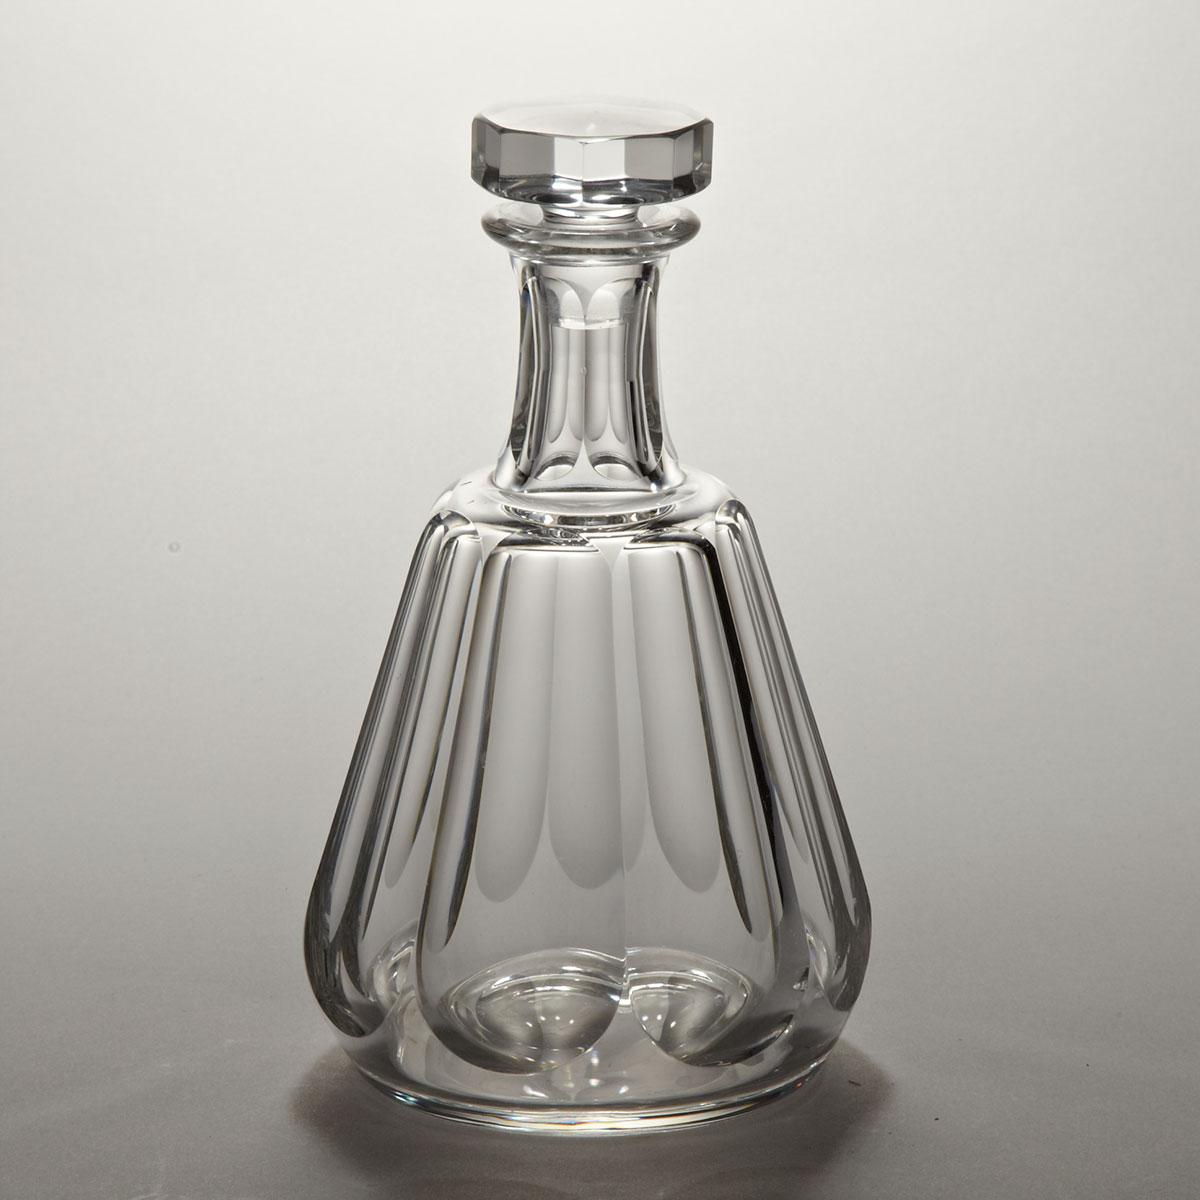 Baccarat Cut Glass Decanter, 20th century